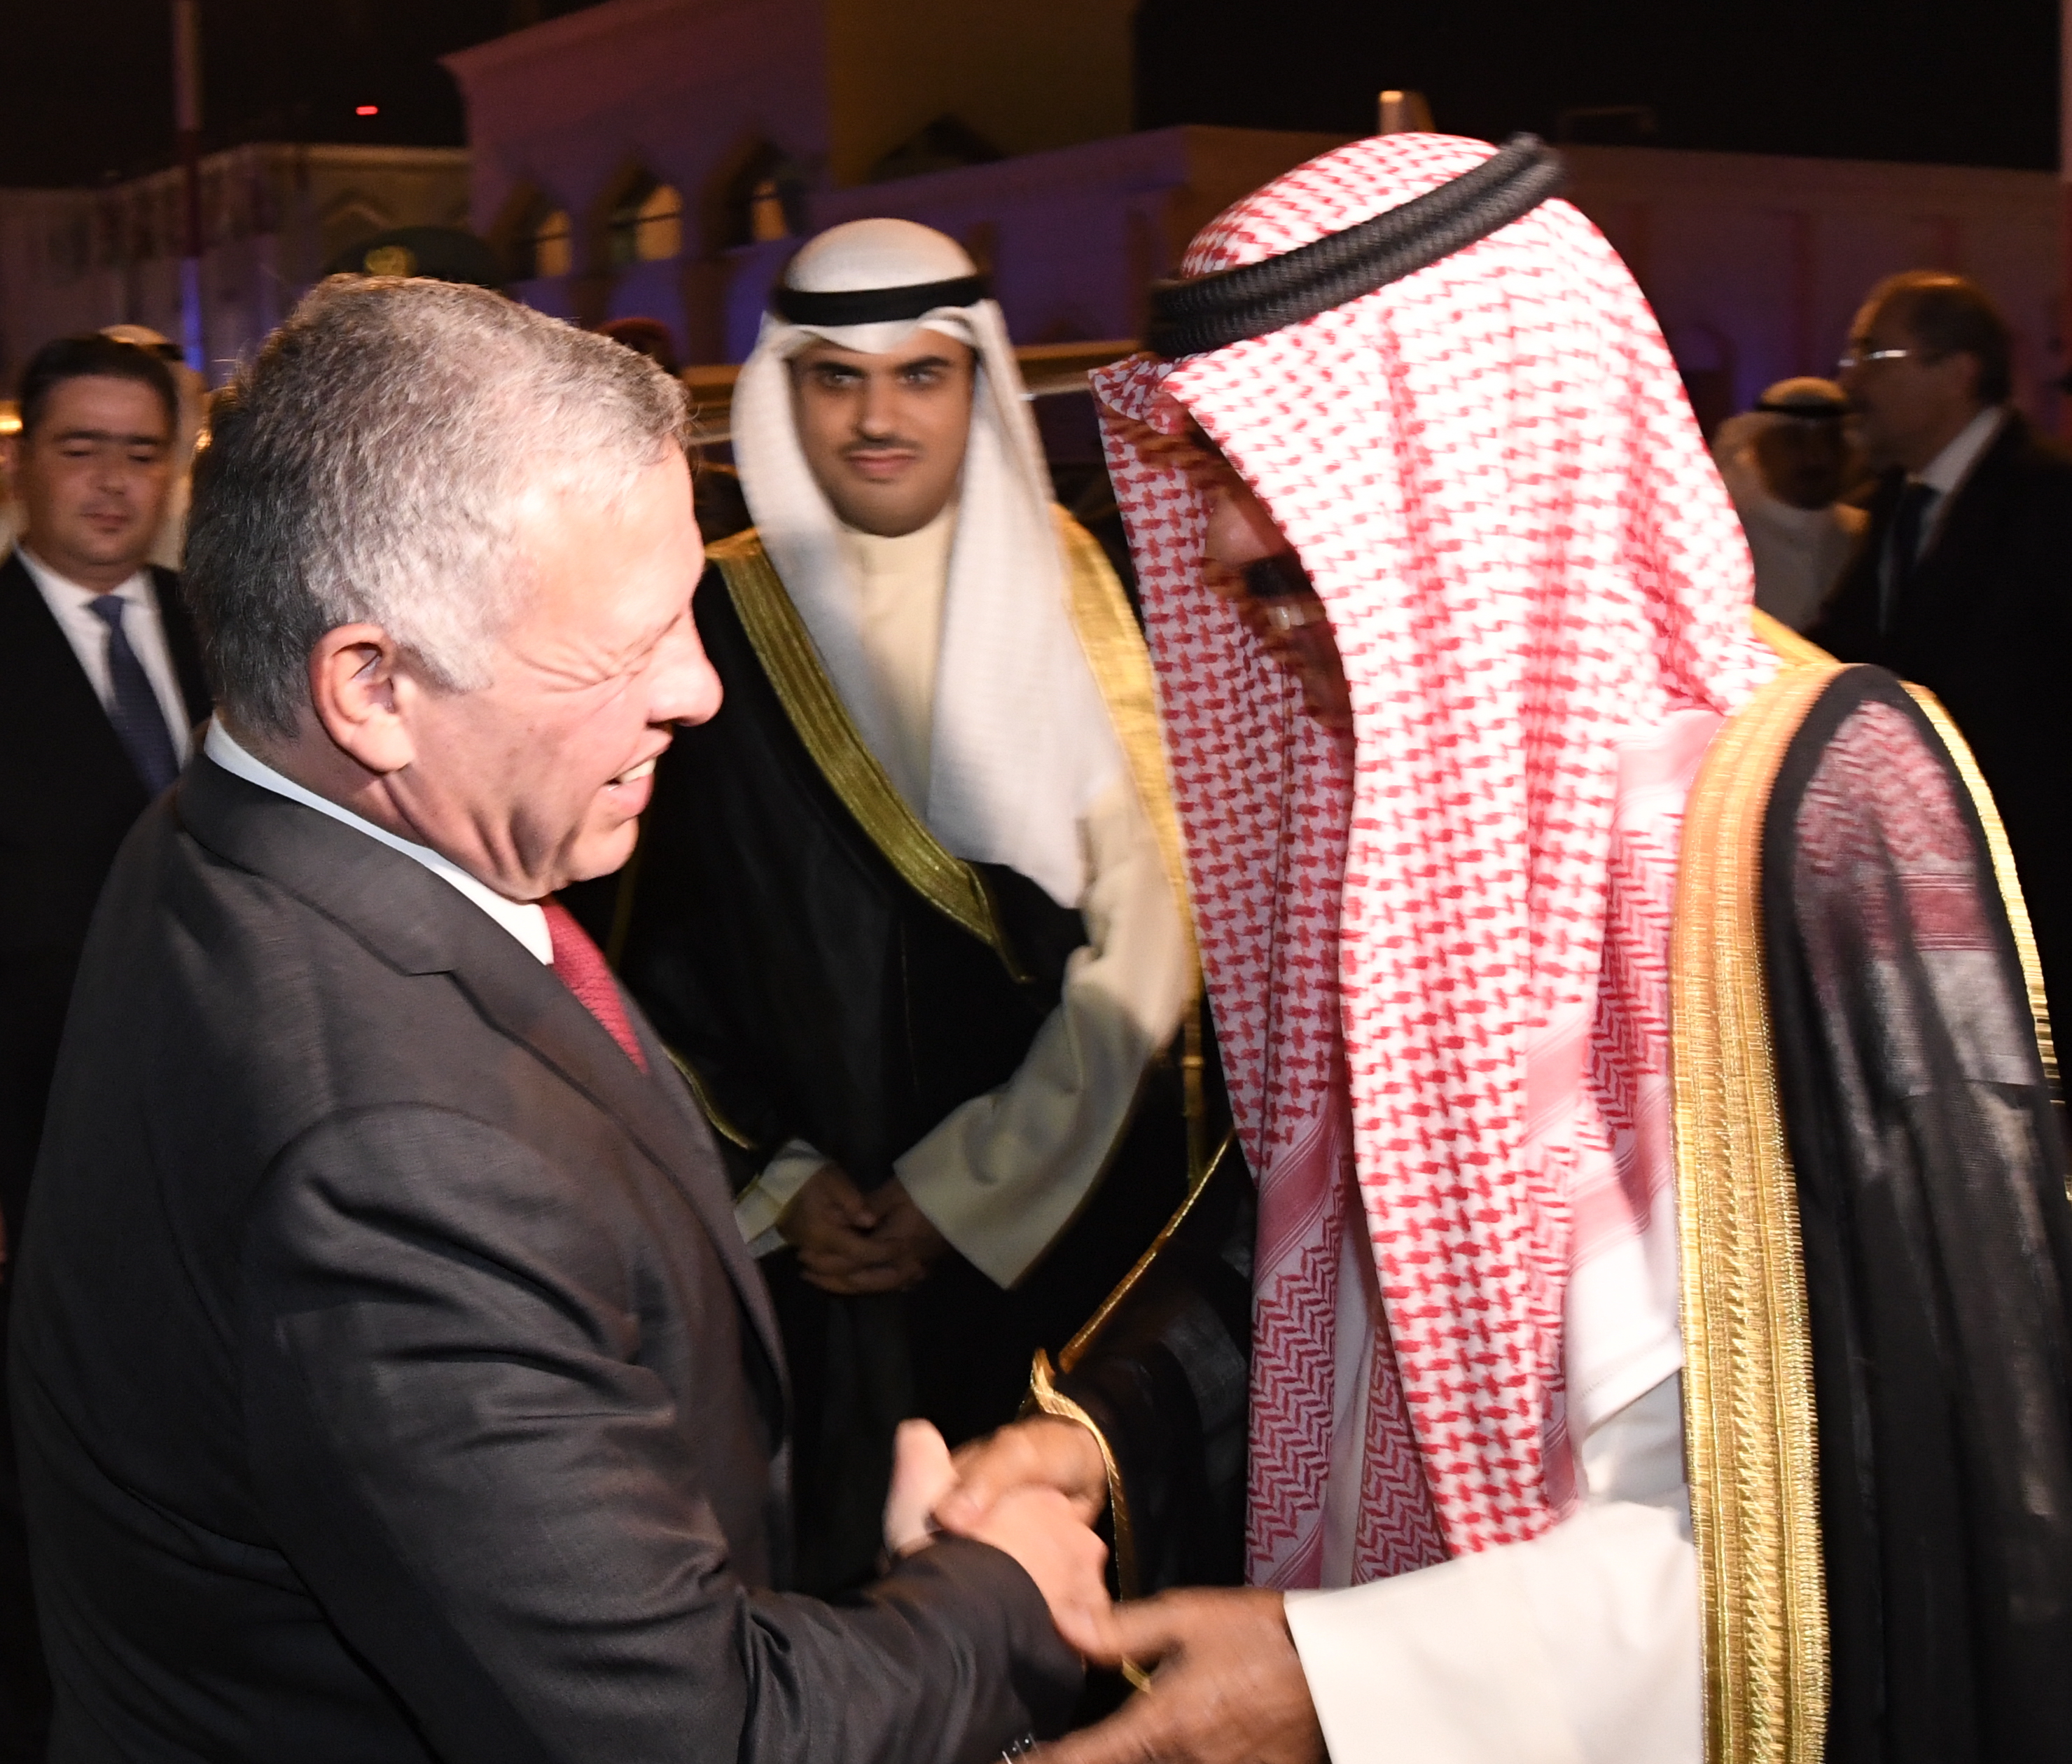 King of Jordan departs after fraternal visit to Kuwait